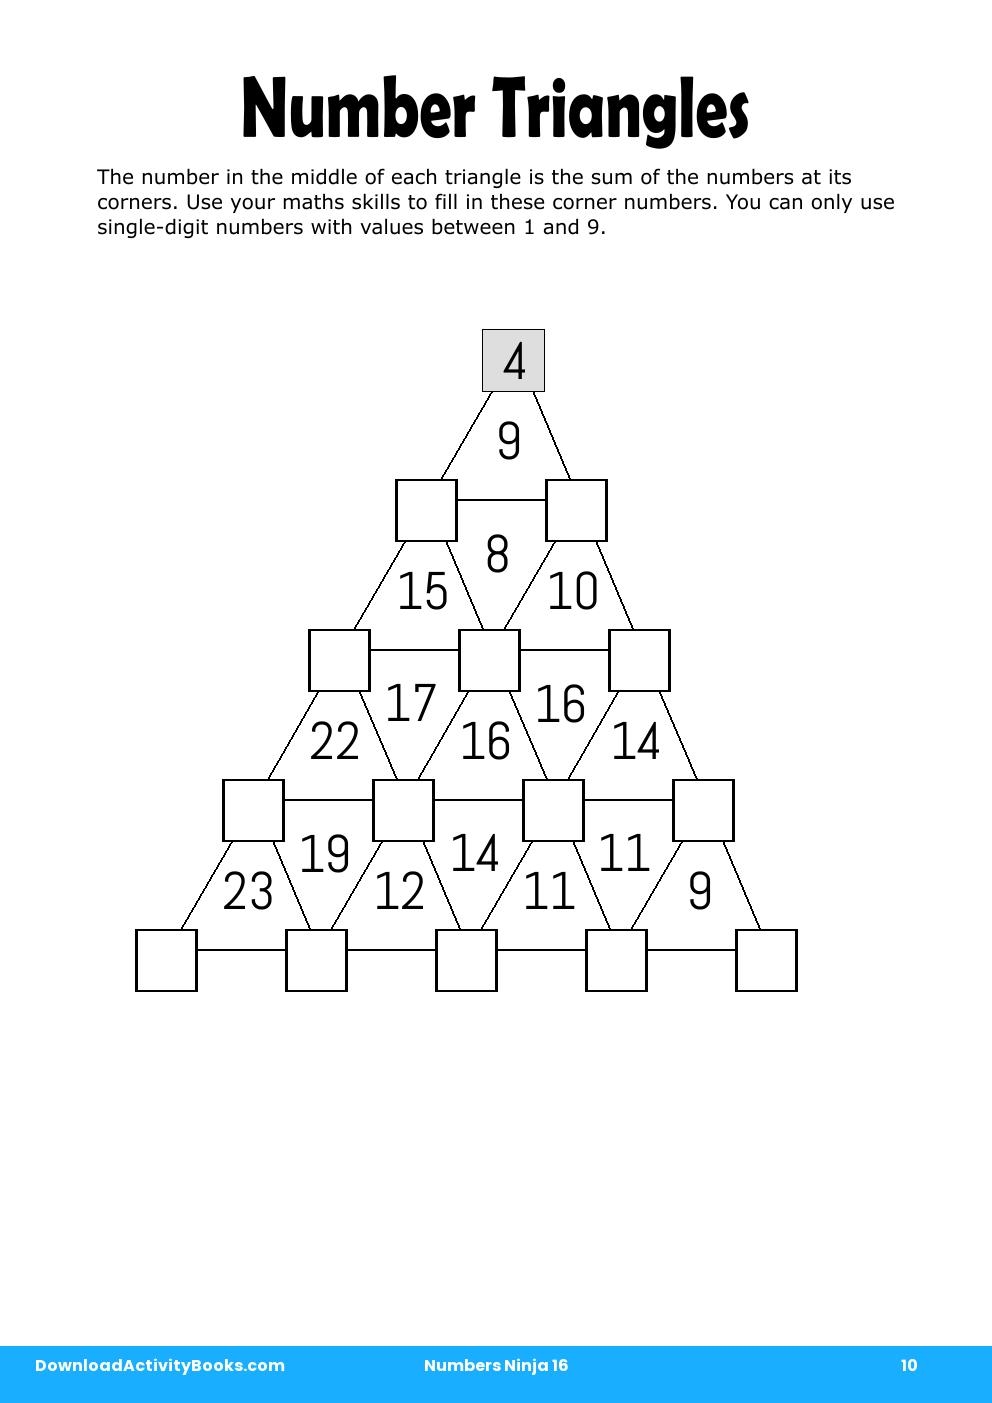 Number Triangles in Numbers Ninja 16